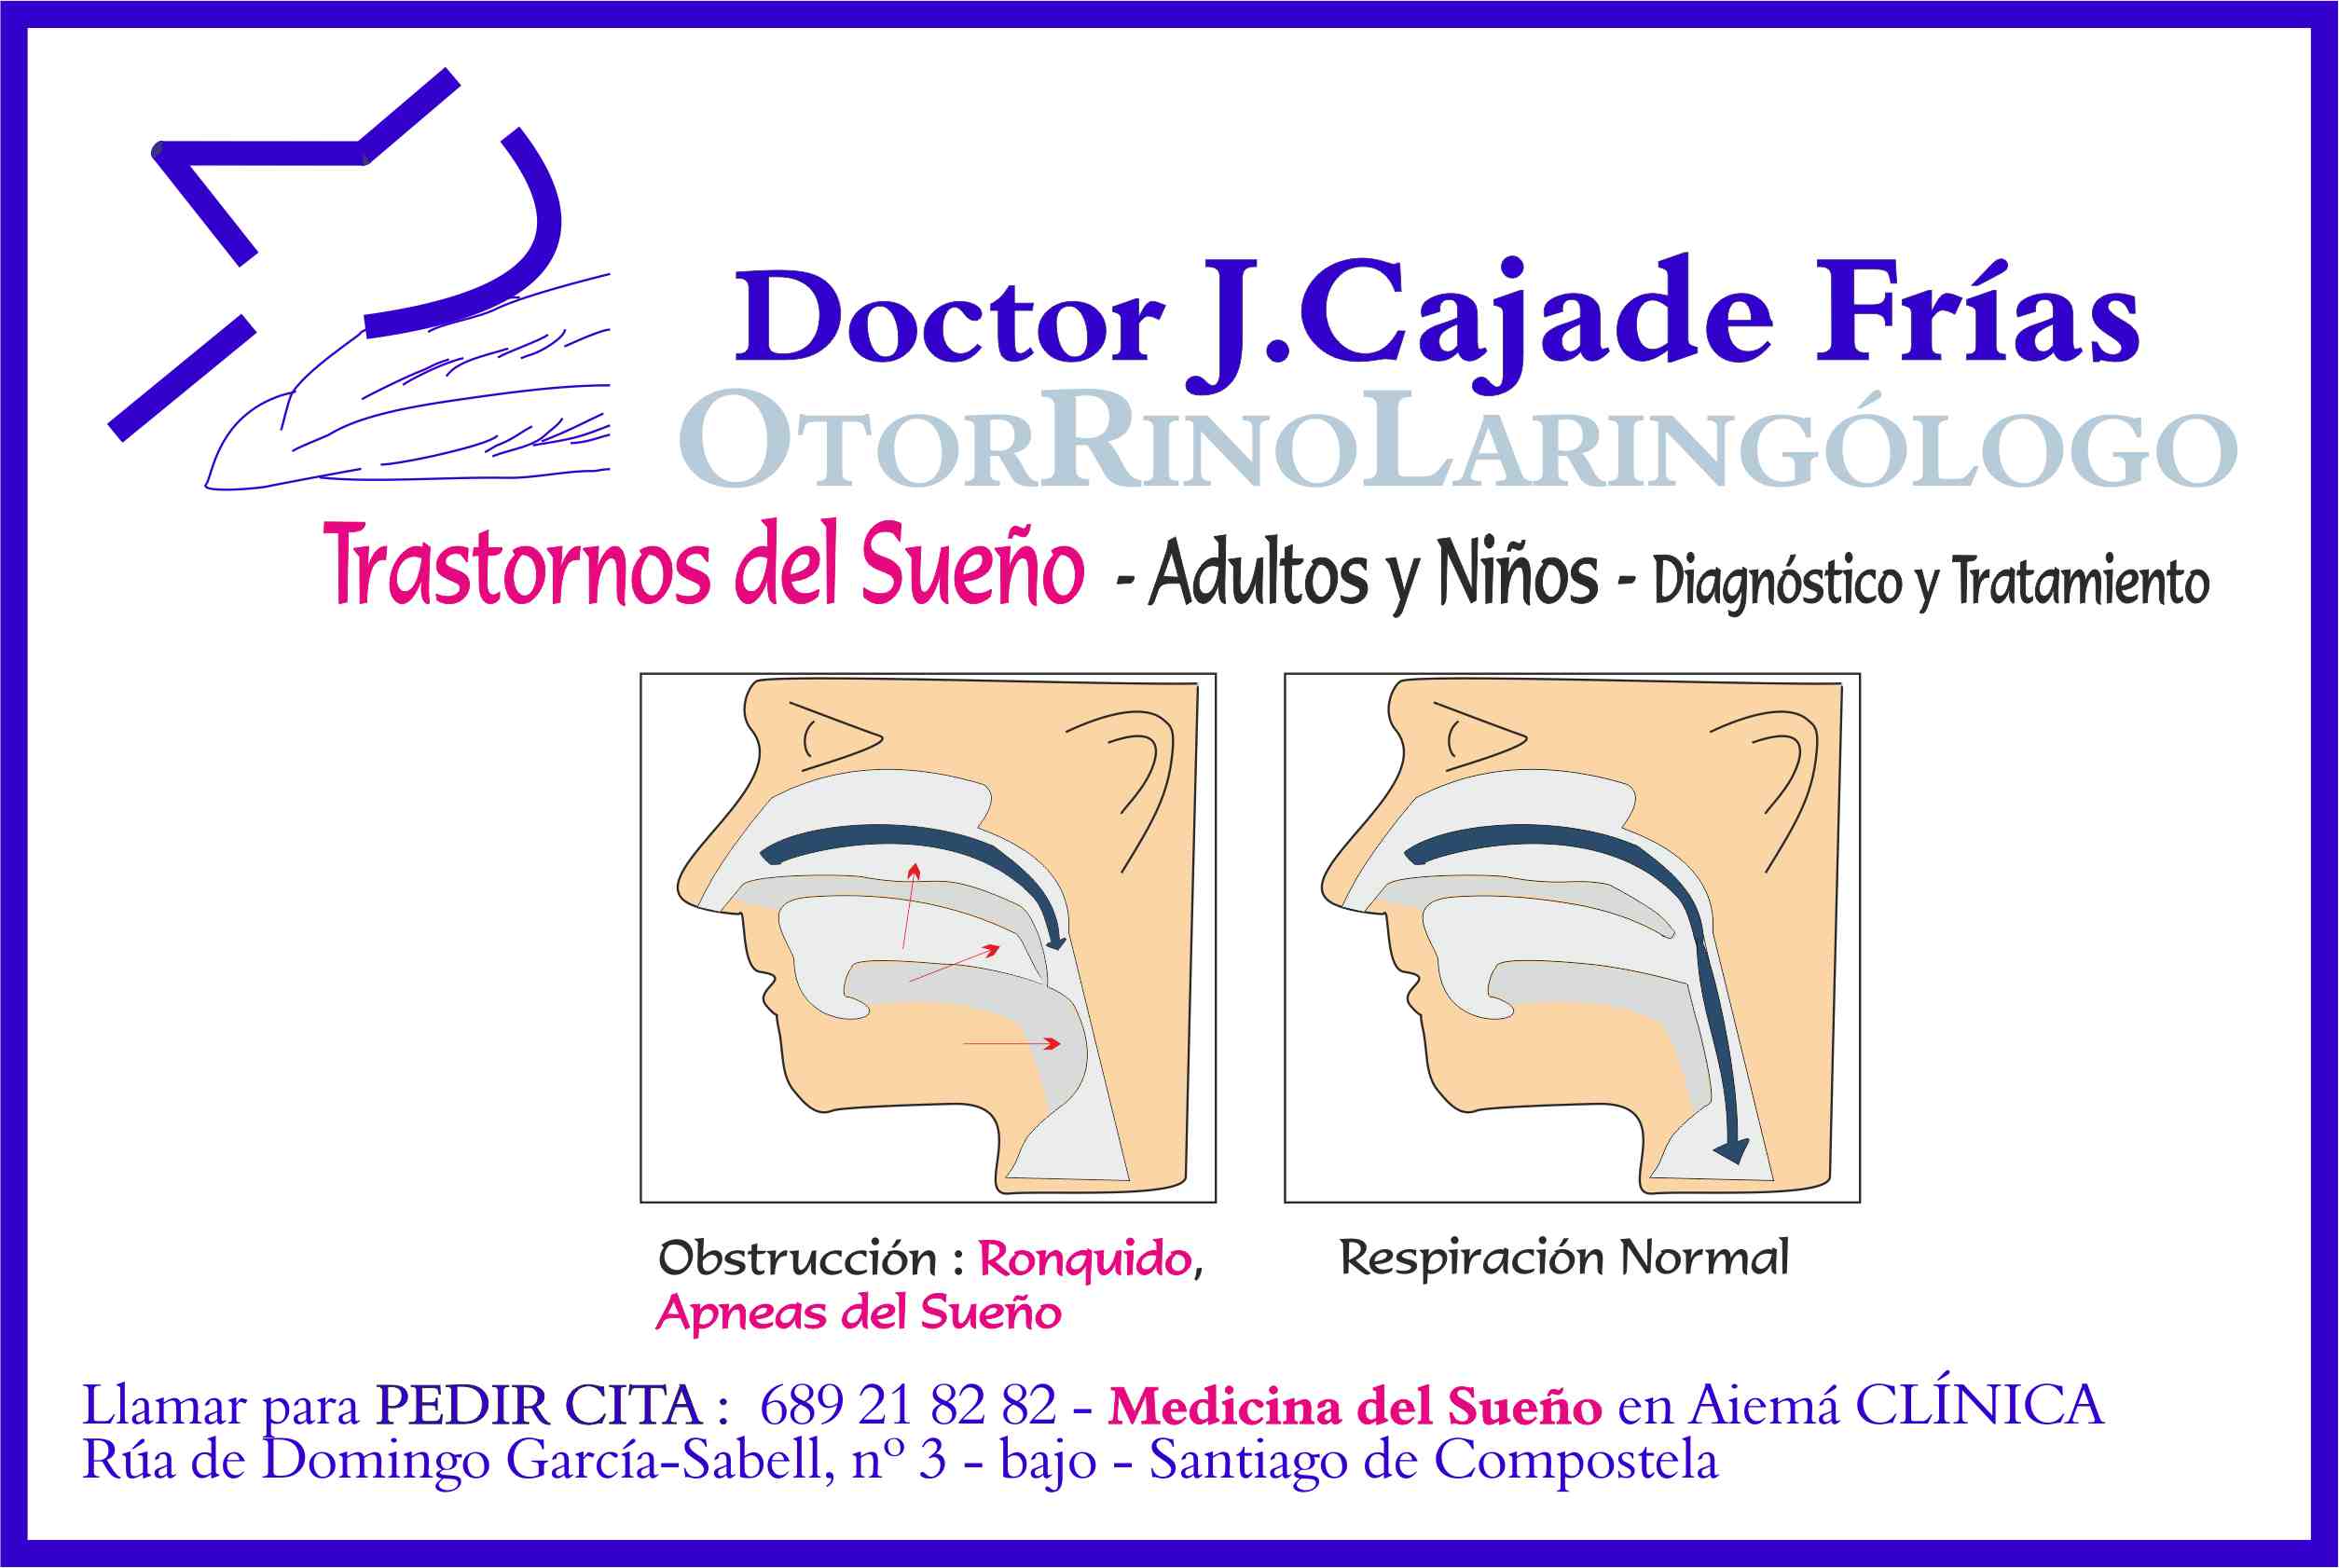 Images Doctor J.Cajade Frías